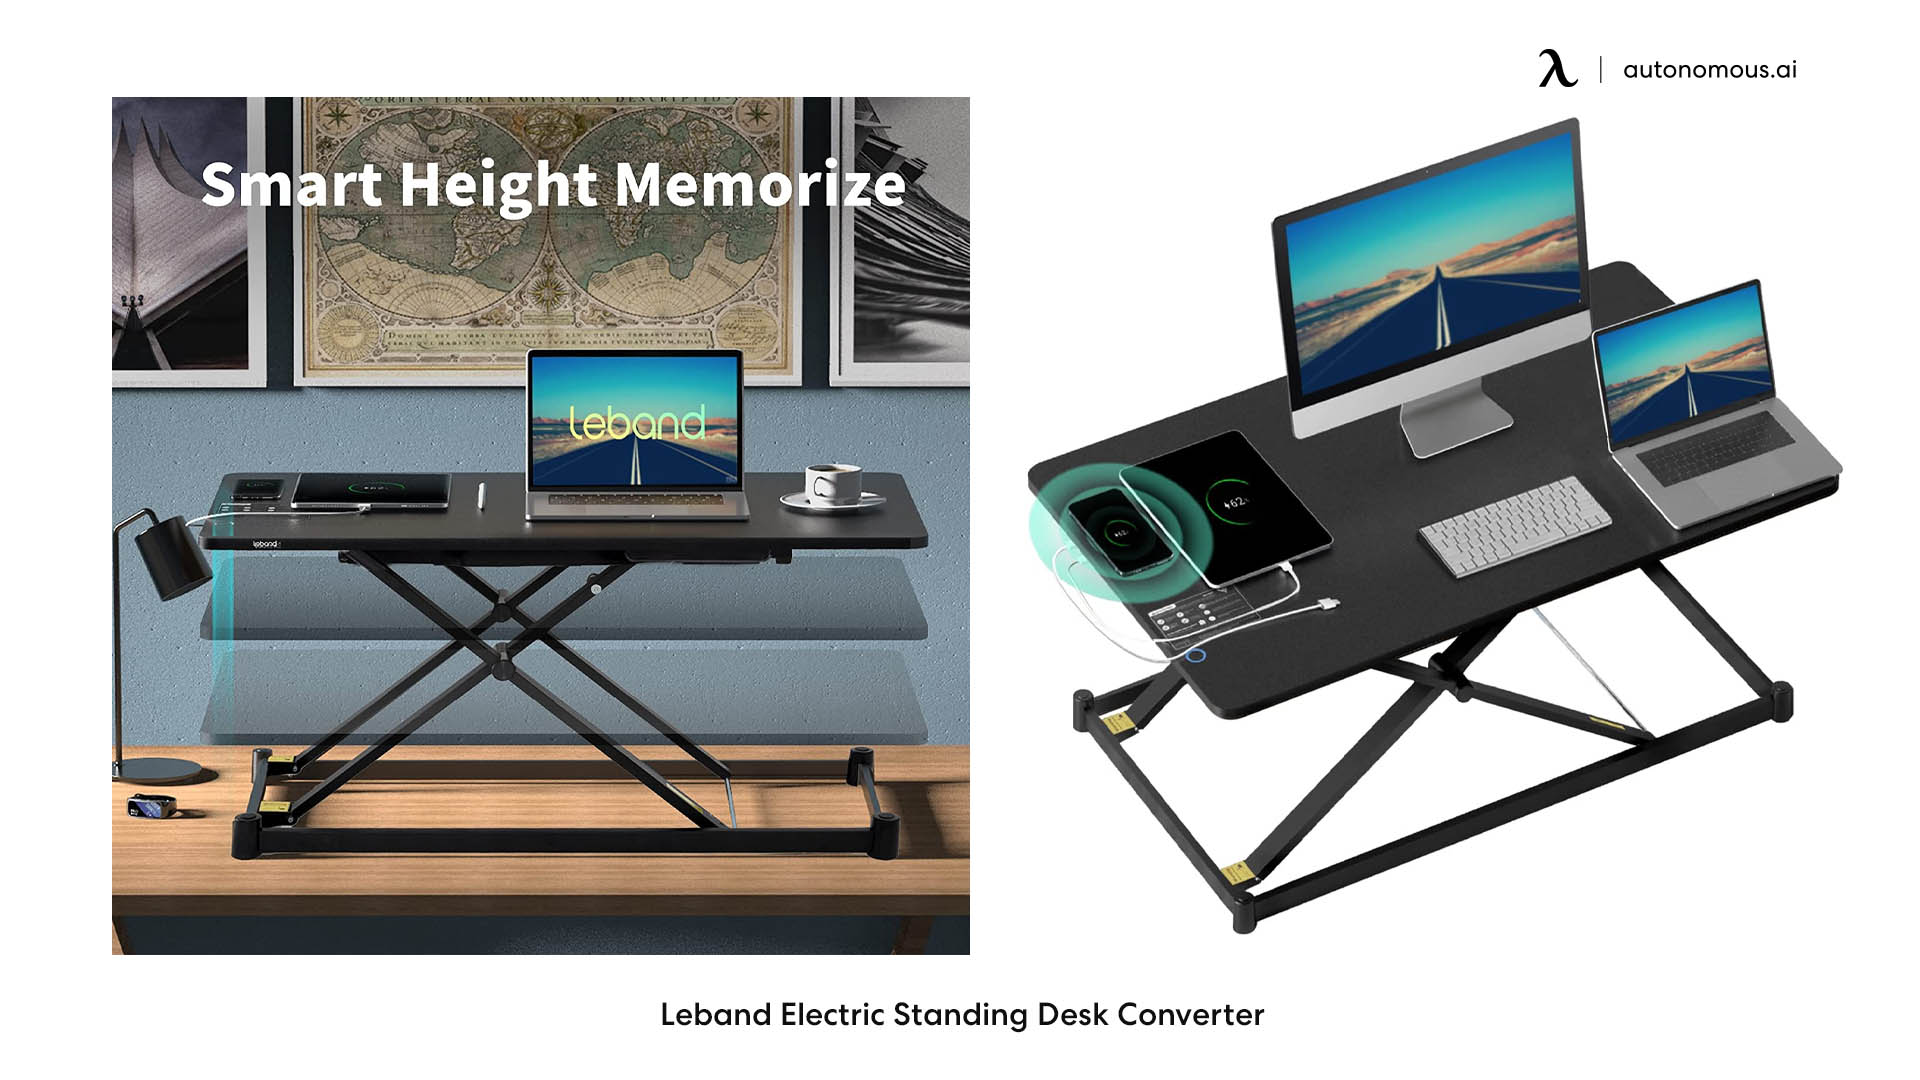 Leband Electric Standing Desk Converter